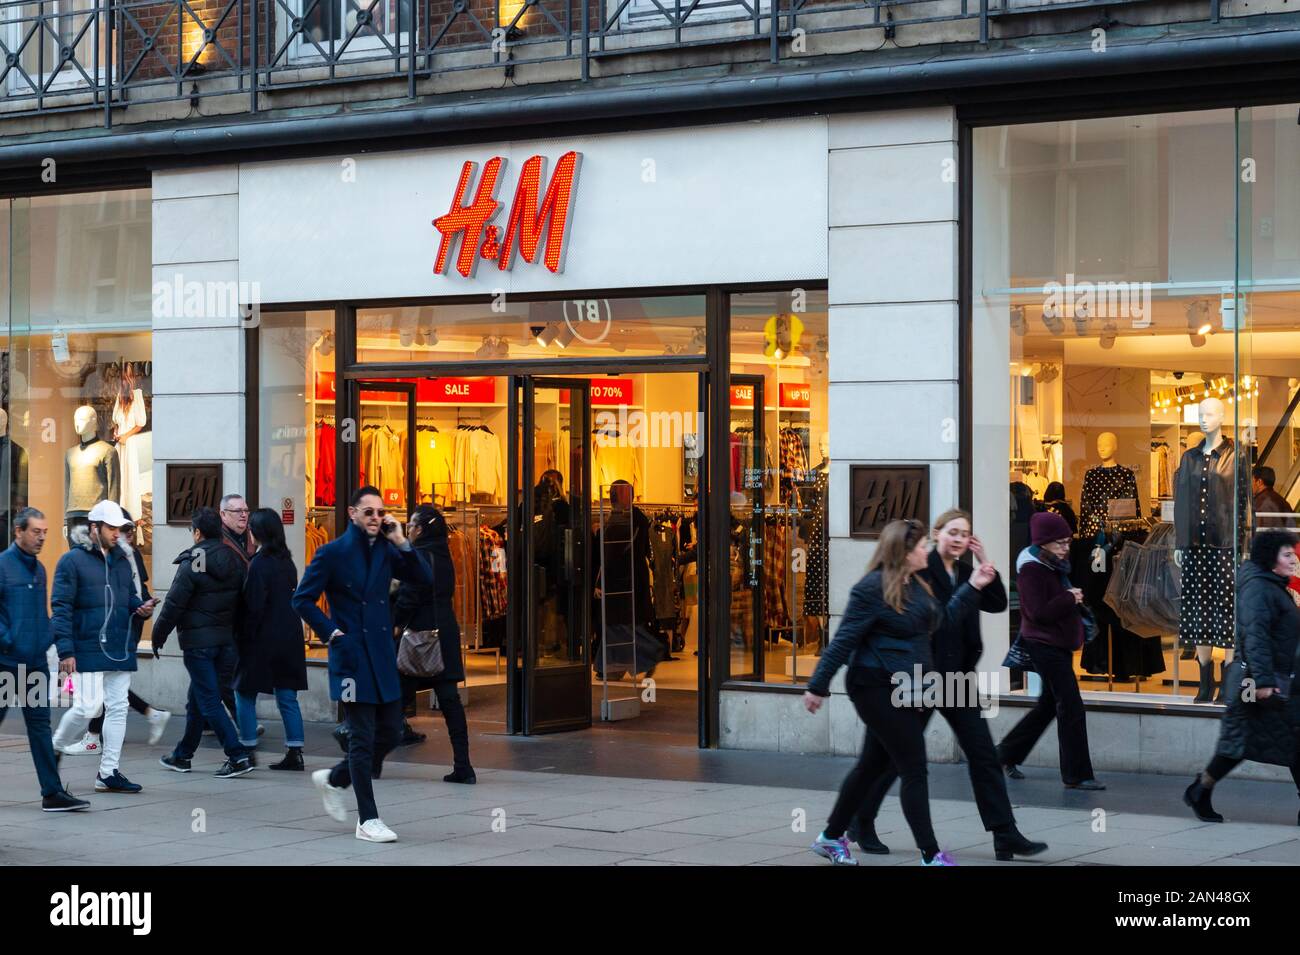 People walking past the H&M retail store shopfront in Oxford Street, London, UK Stock Photo